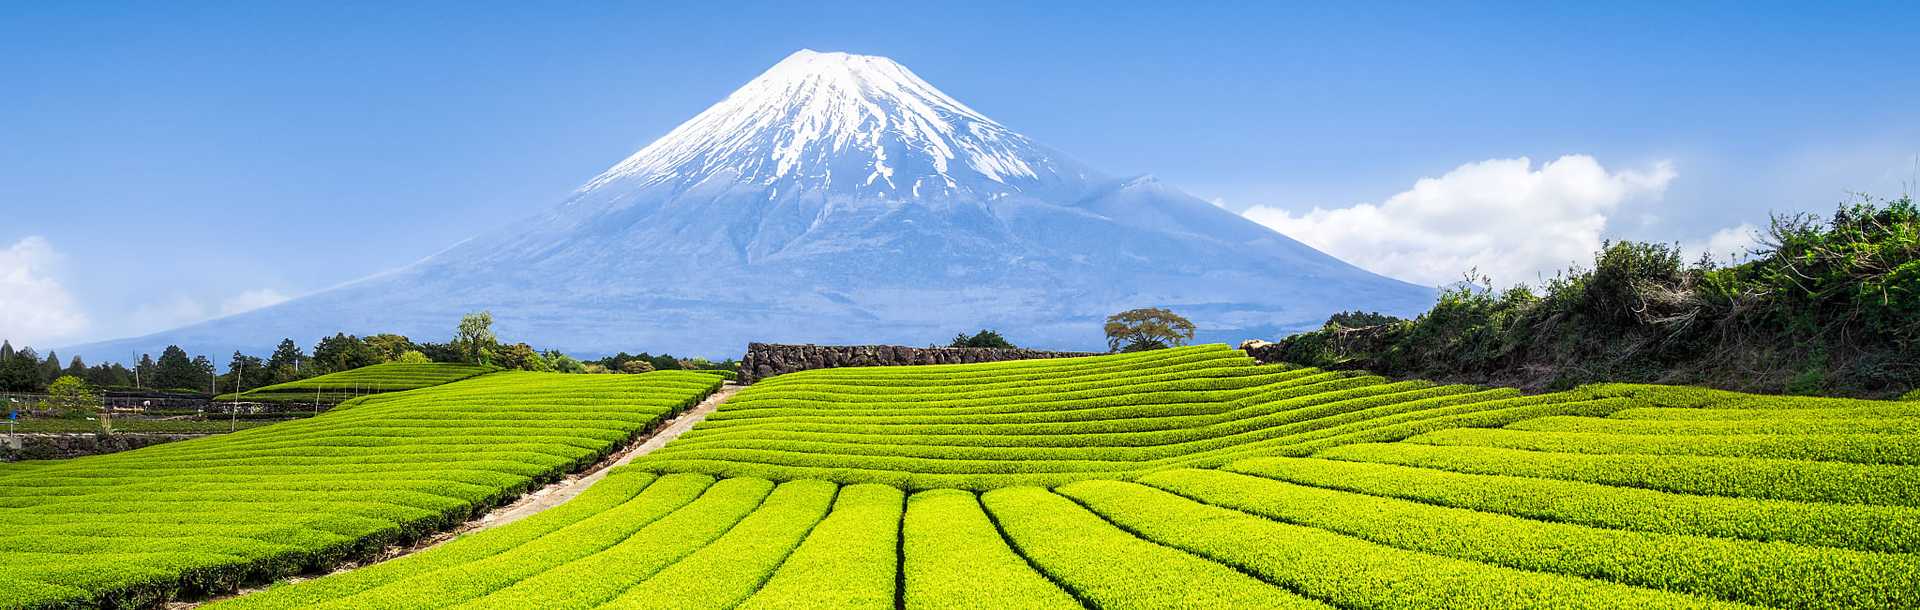 Mount Fuji and tea fields in Japan.